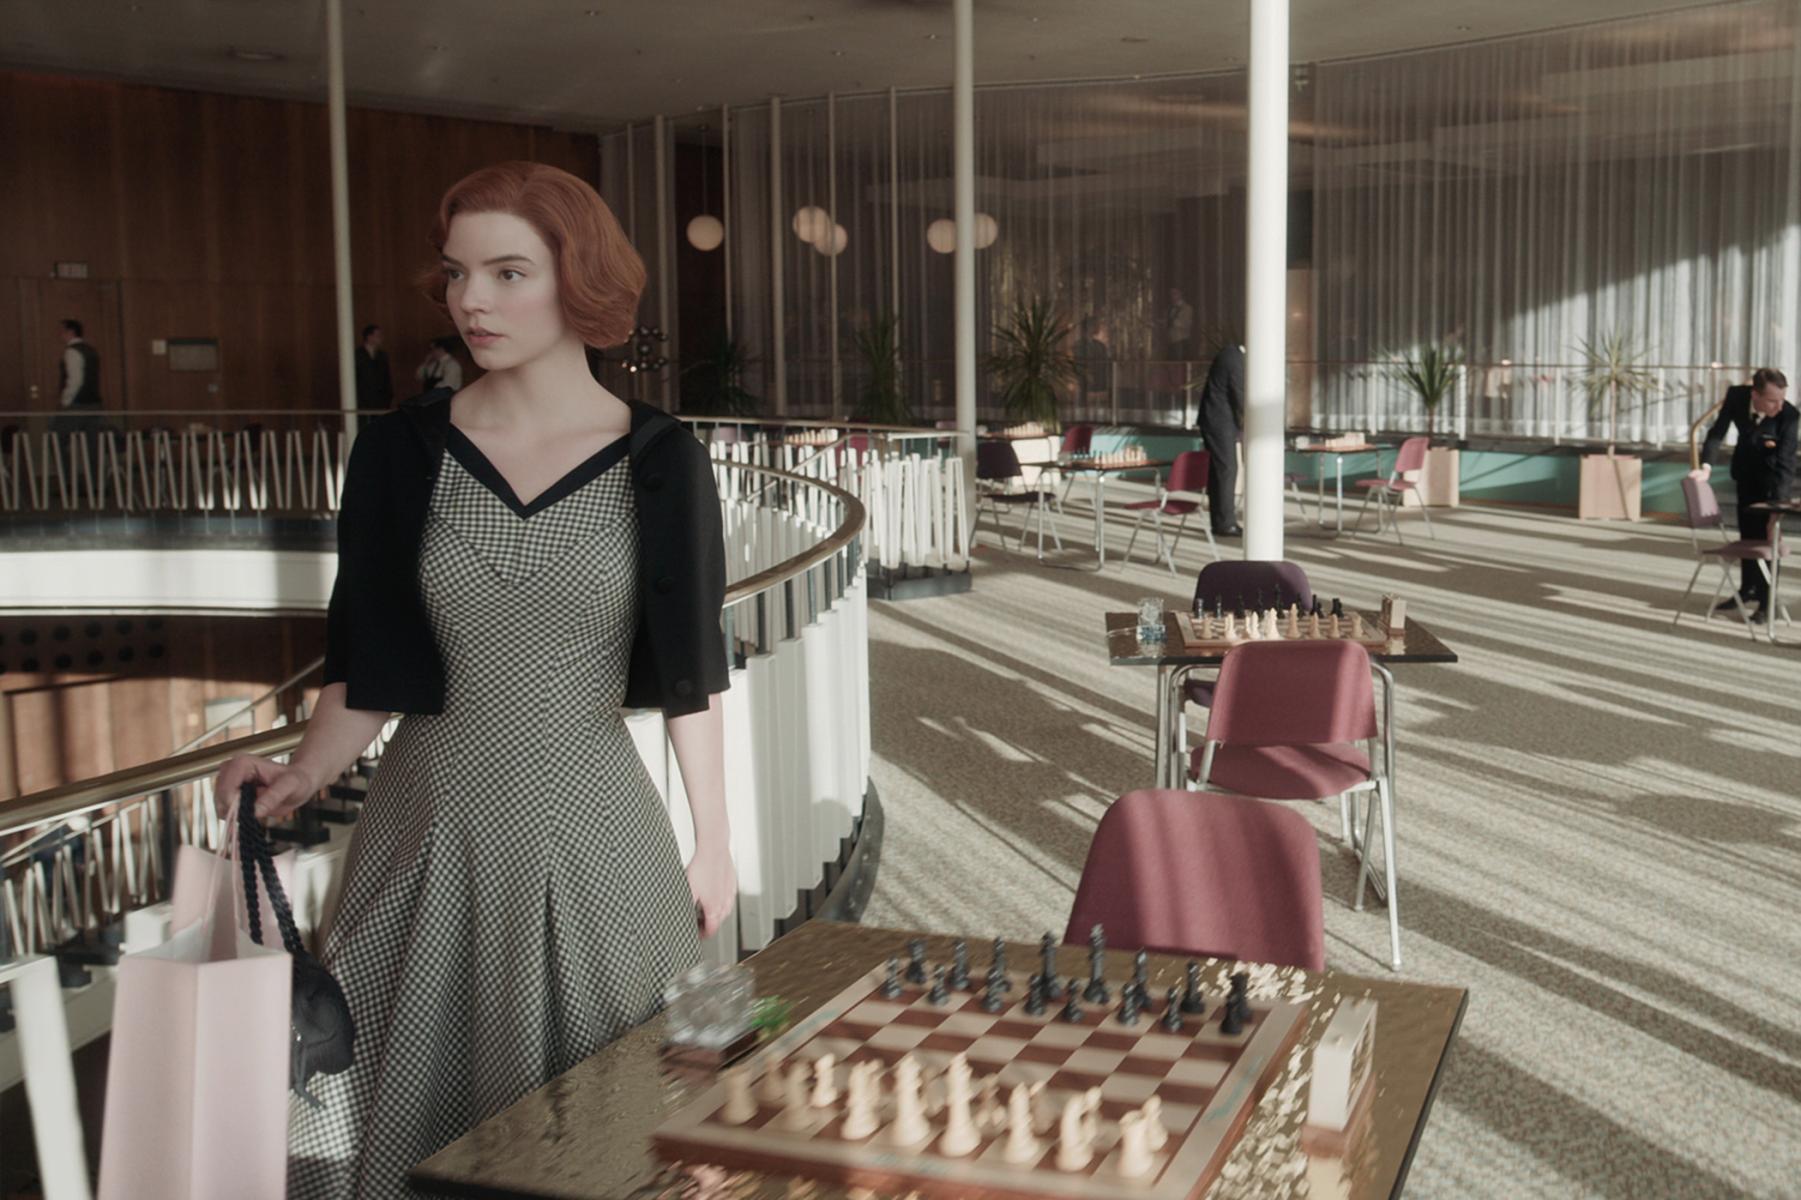 La serie 'Gambito de dama' ha revolucionado el mundo del ajedrez”